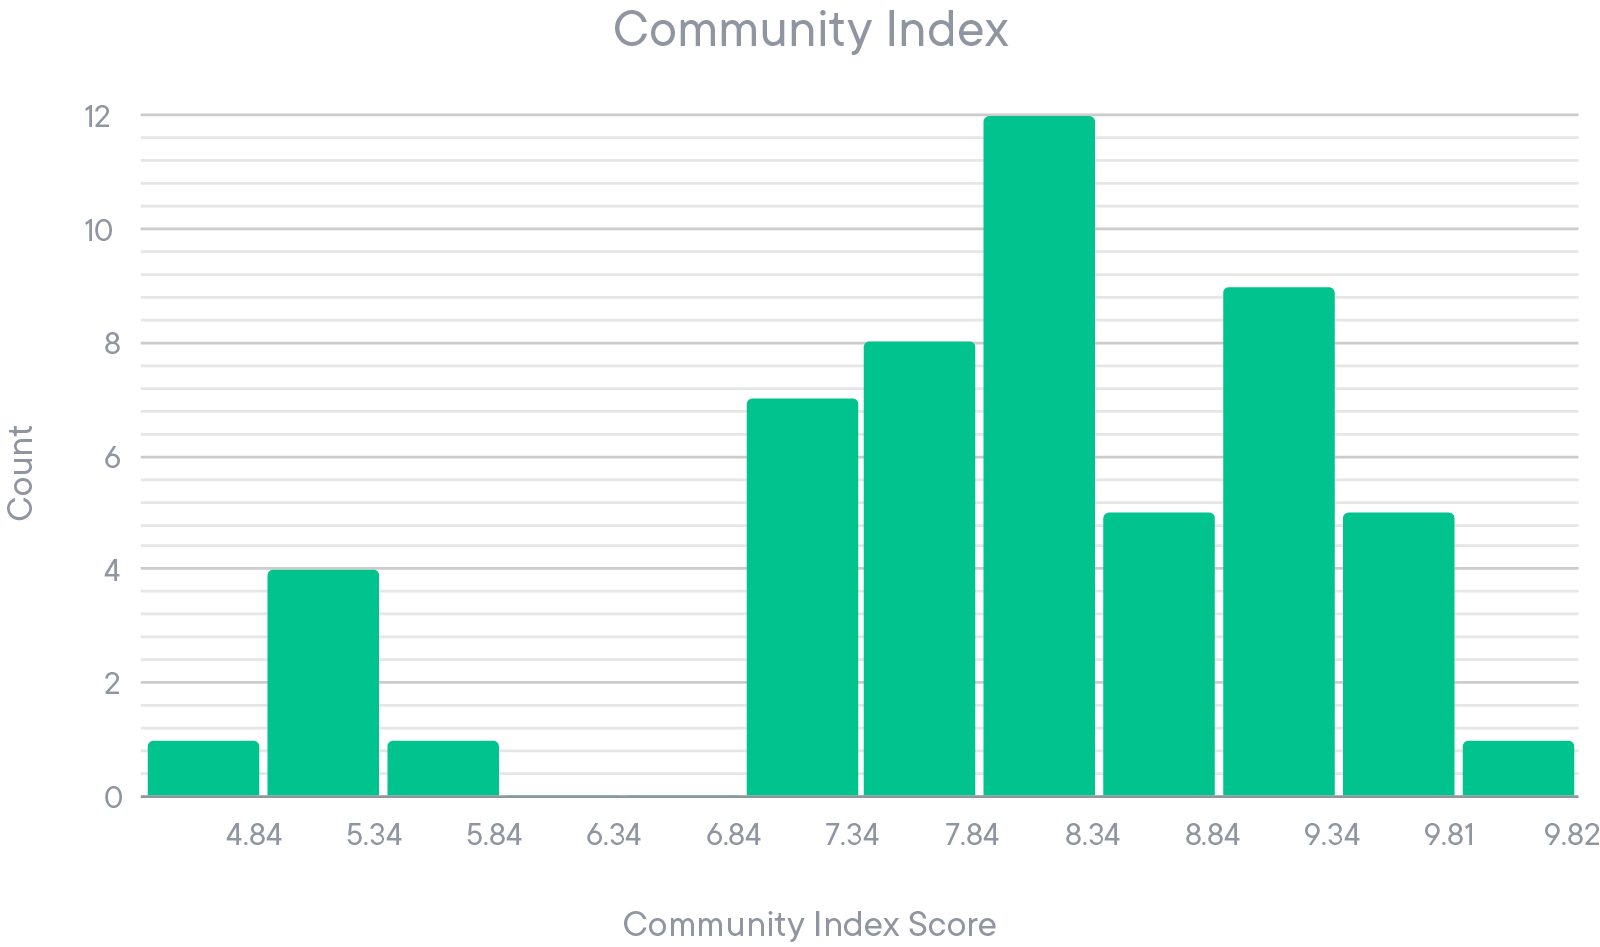 Community Index Score Distribution 